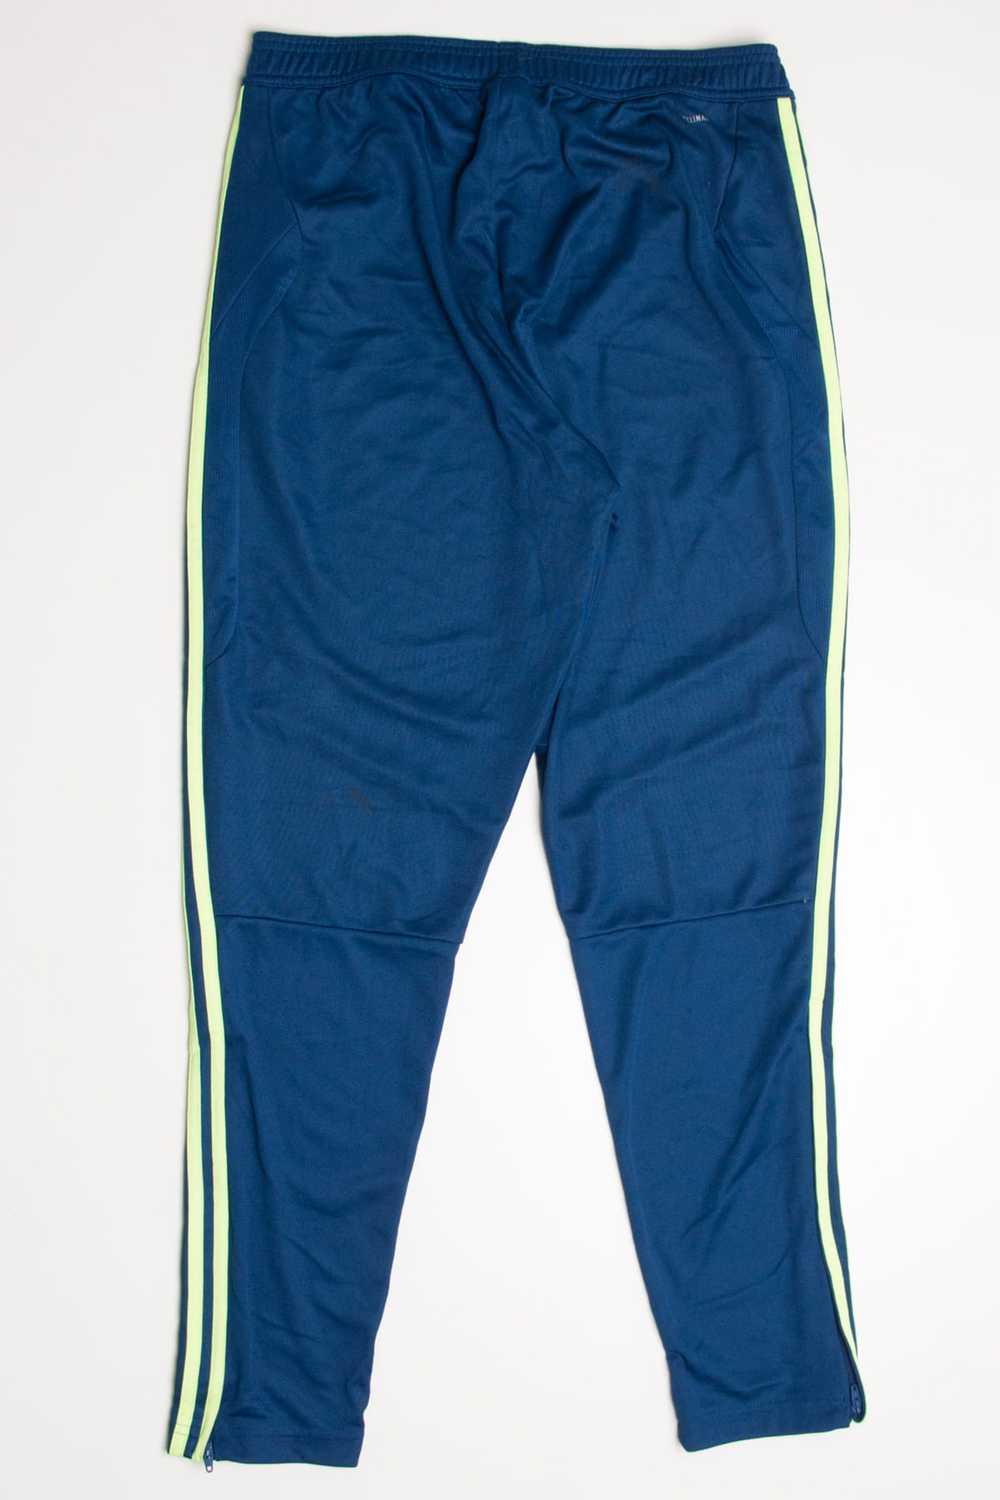 Teal & Lime Adidas Soccer Pants (sz. L) - image 5